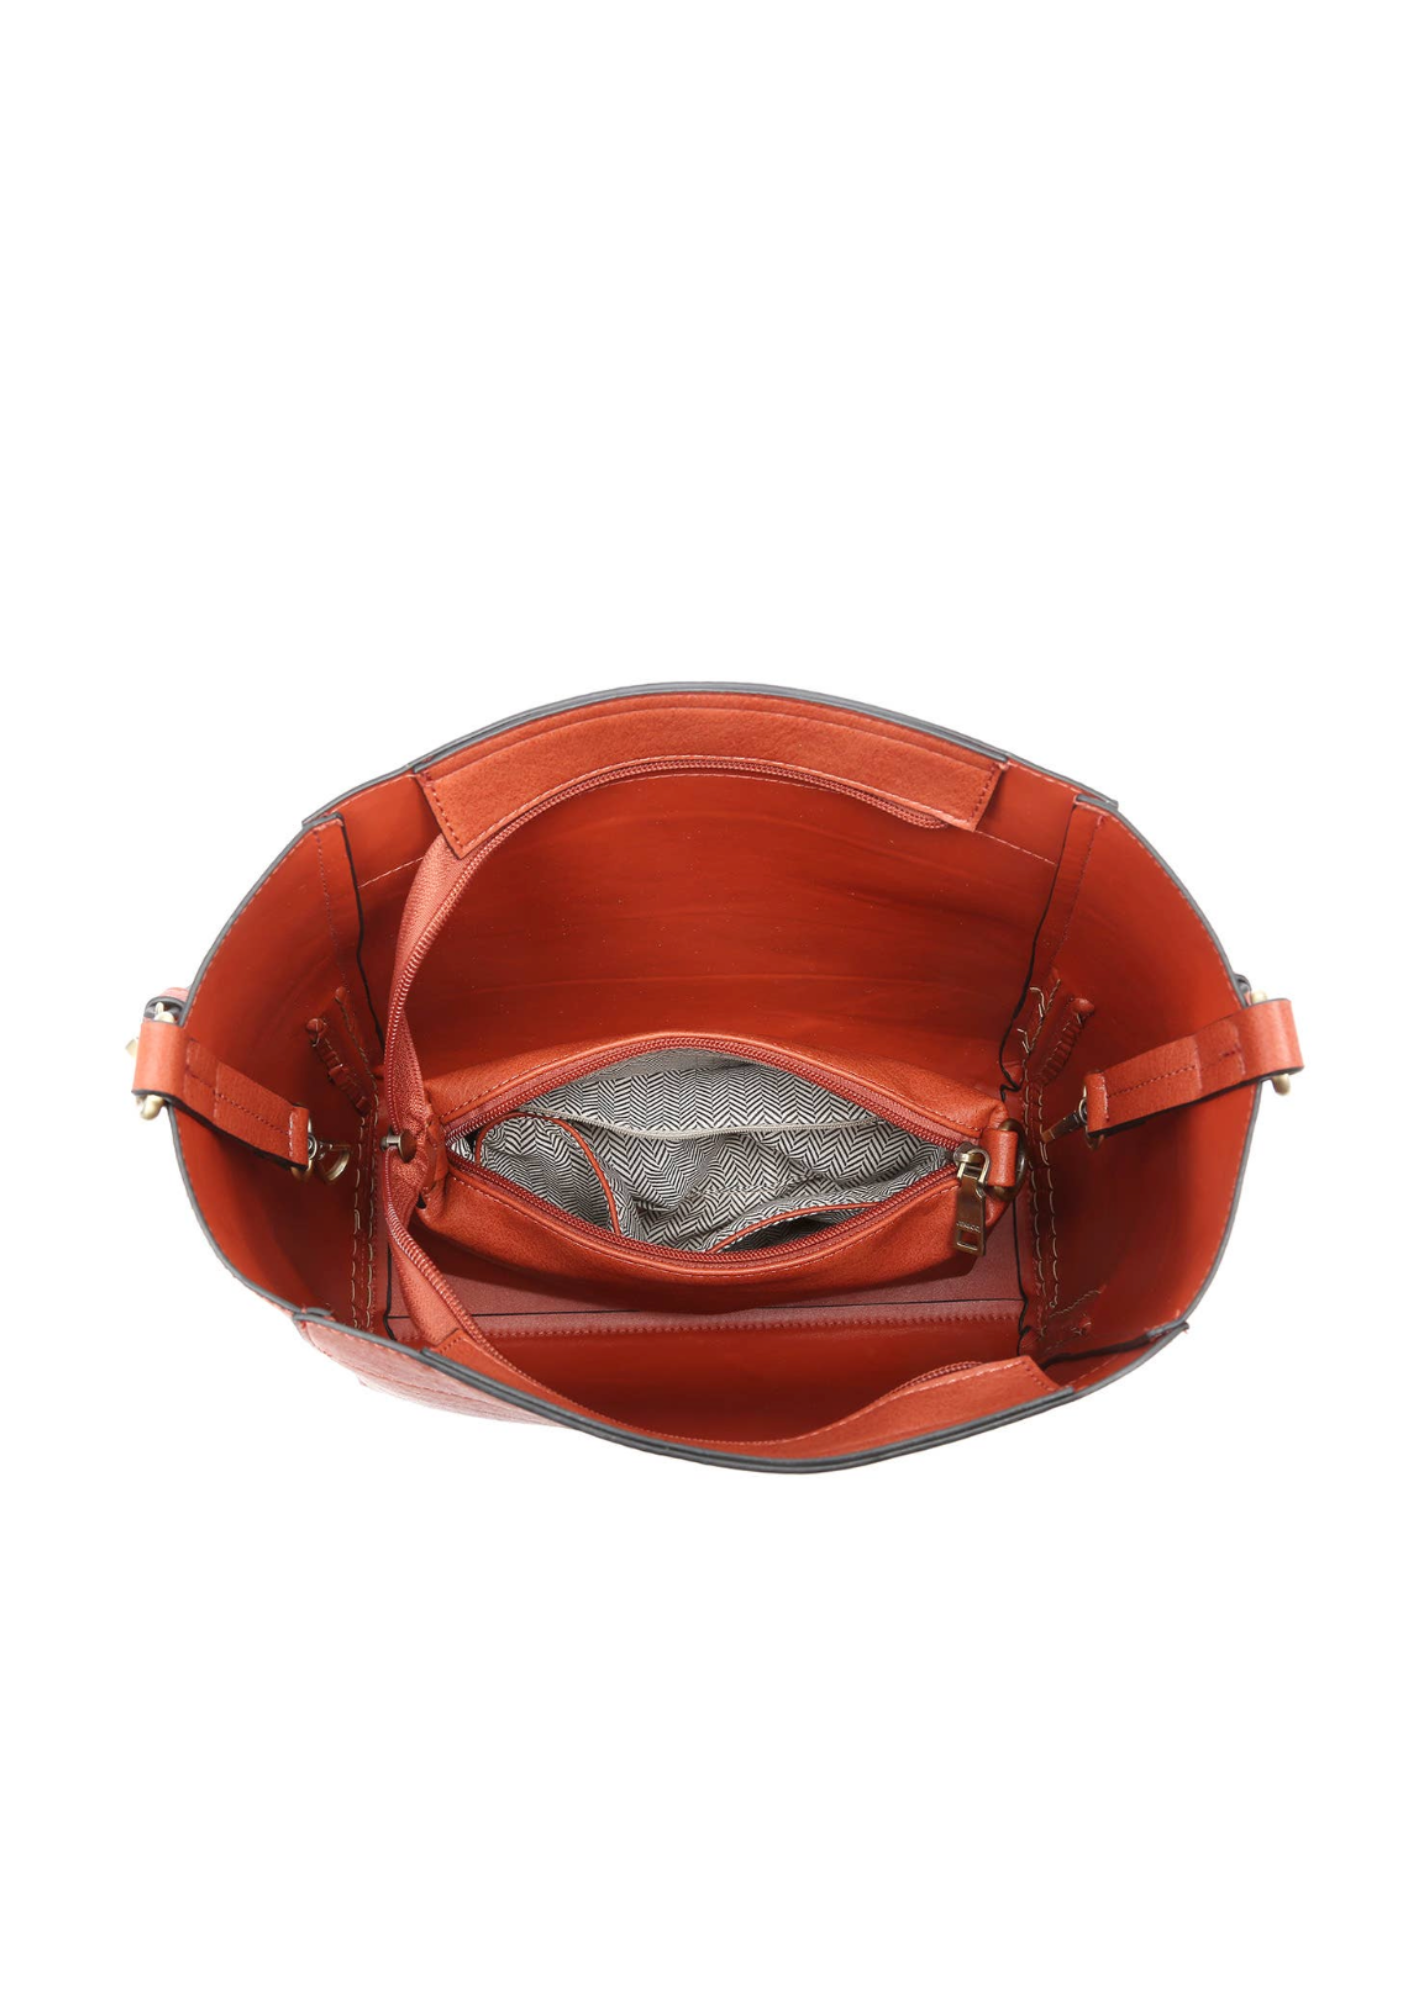 View of inside of bucket purse 